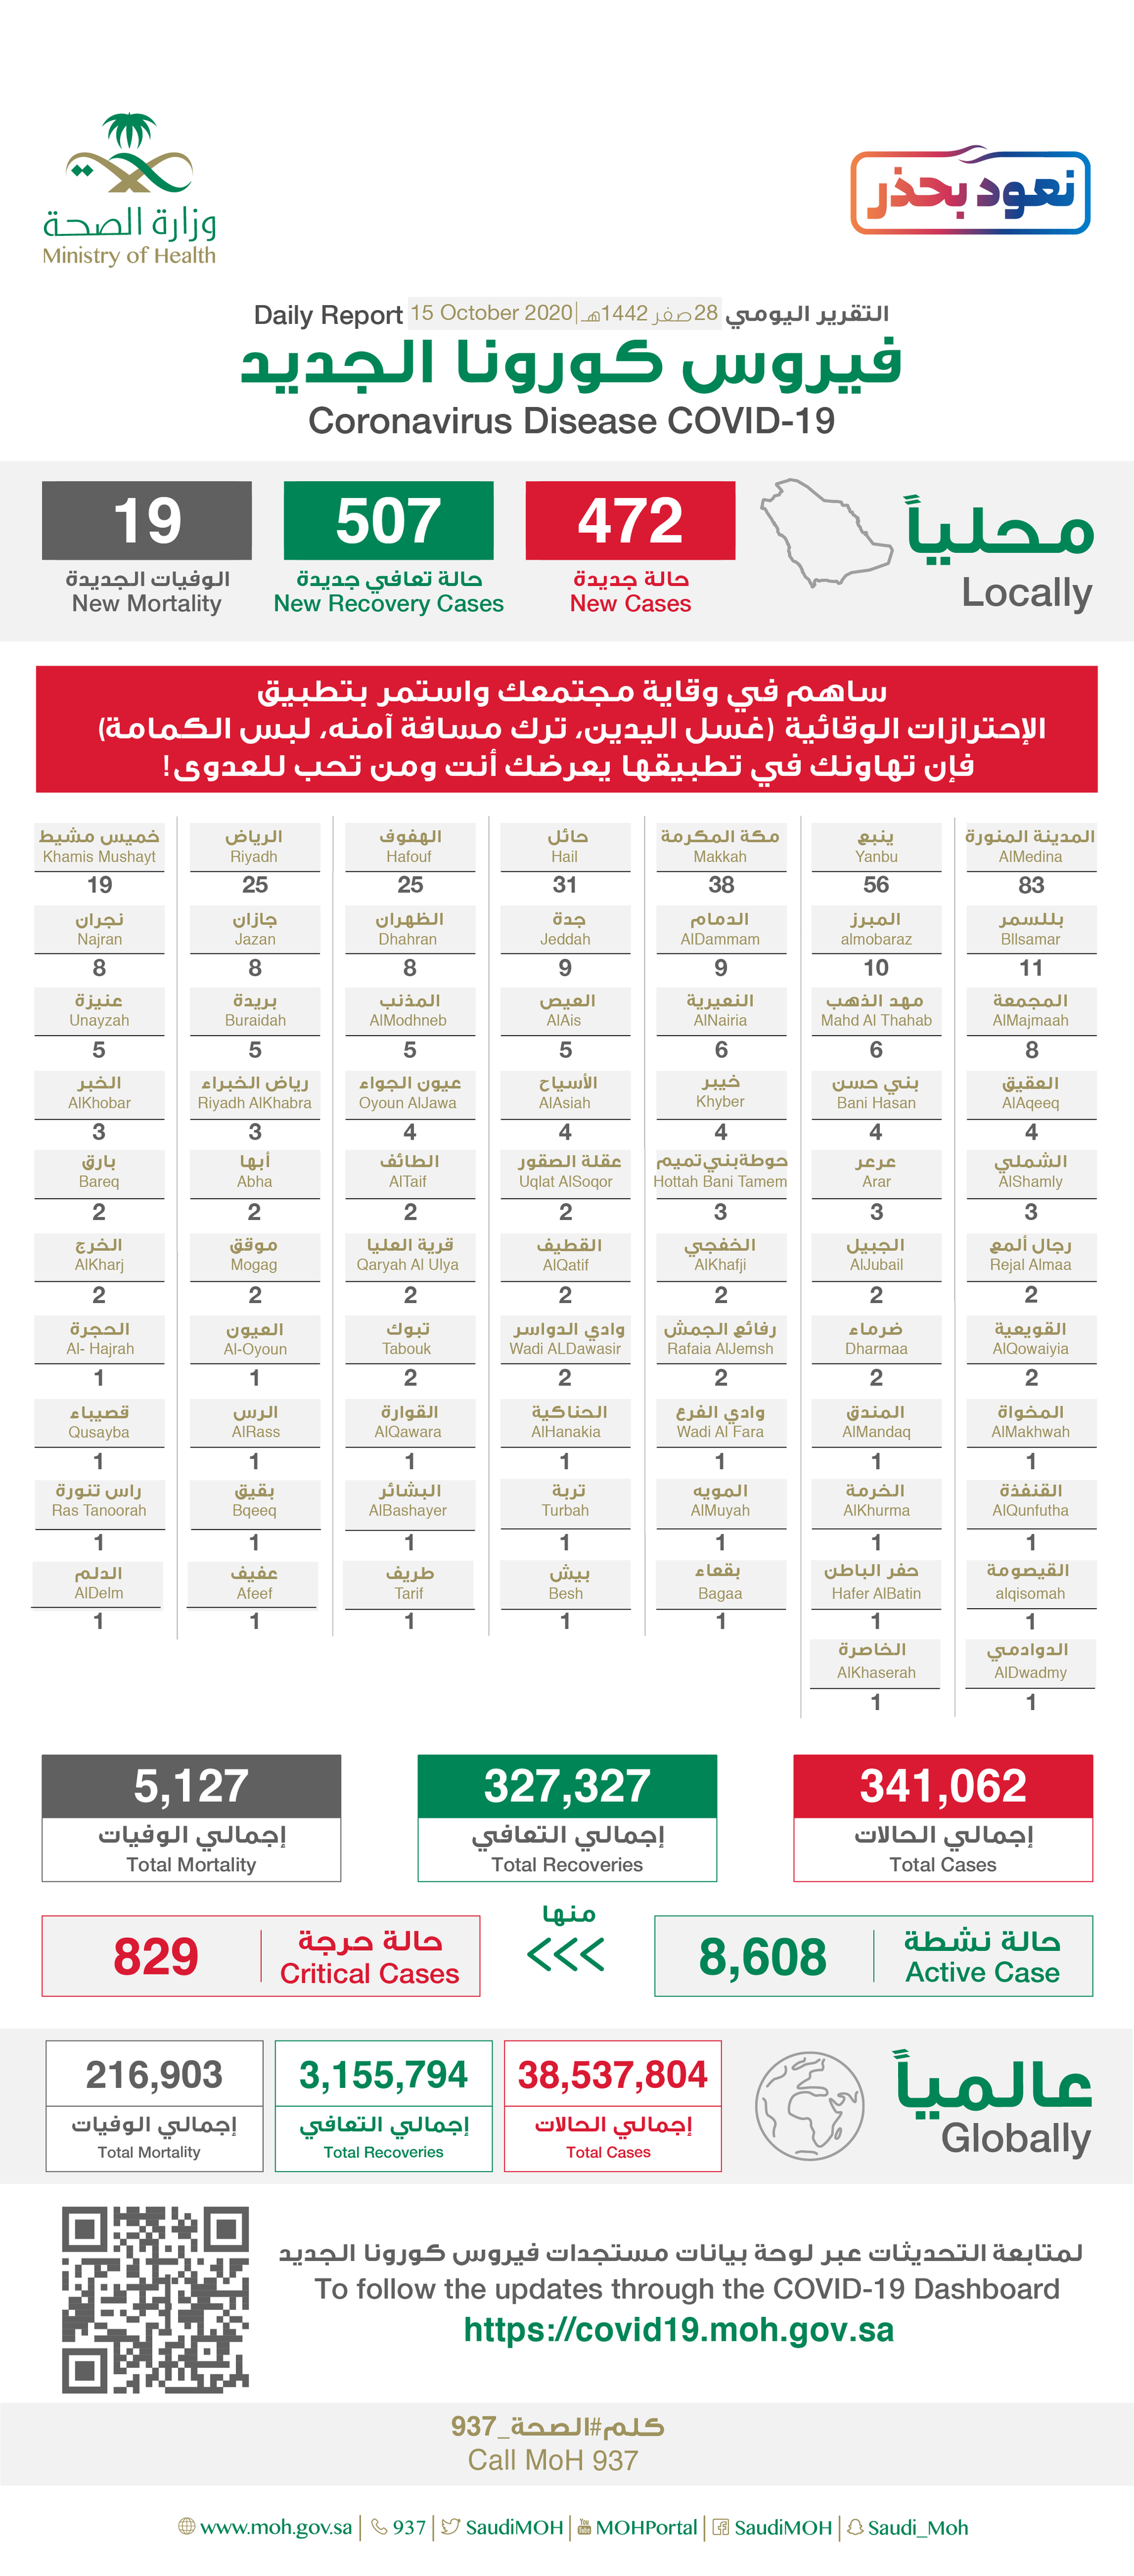 Saudi Arabia Coronavirus : Total Cases :341,062, New Cases : 472, Cured : 327,327 , Deaths: 5,127, Active Cases : 8,608